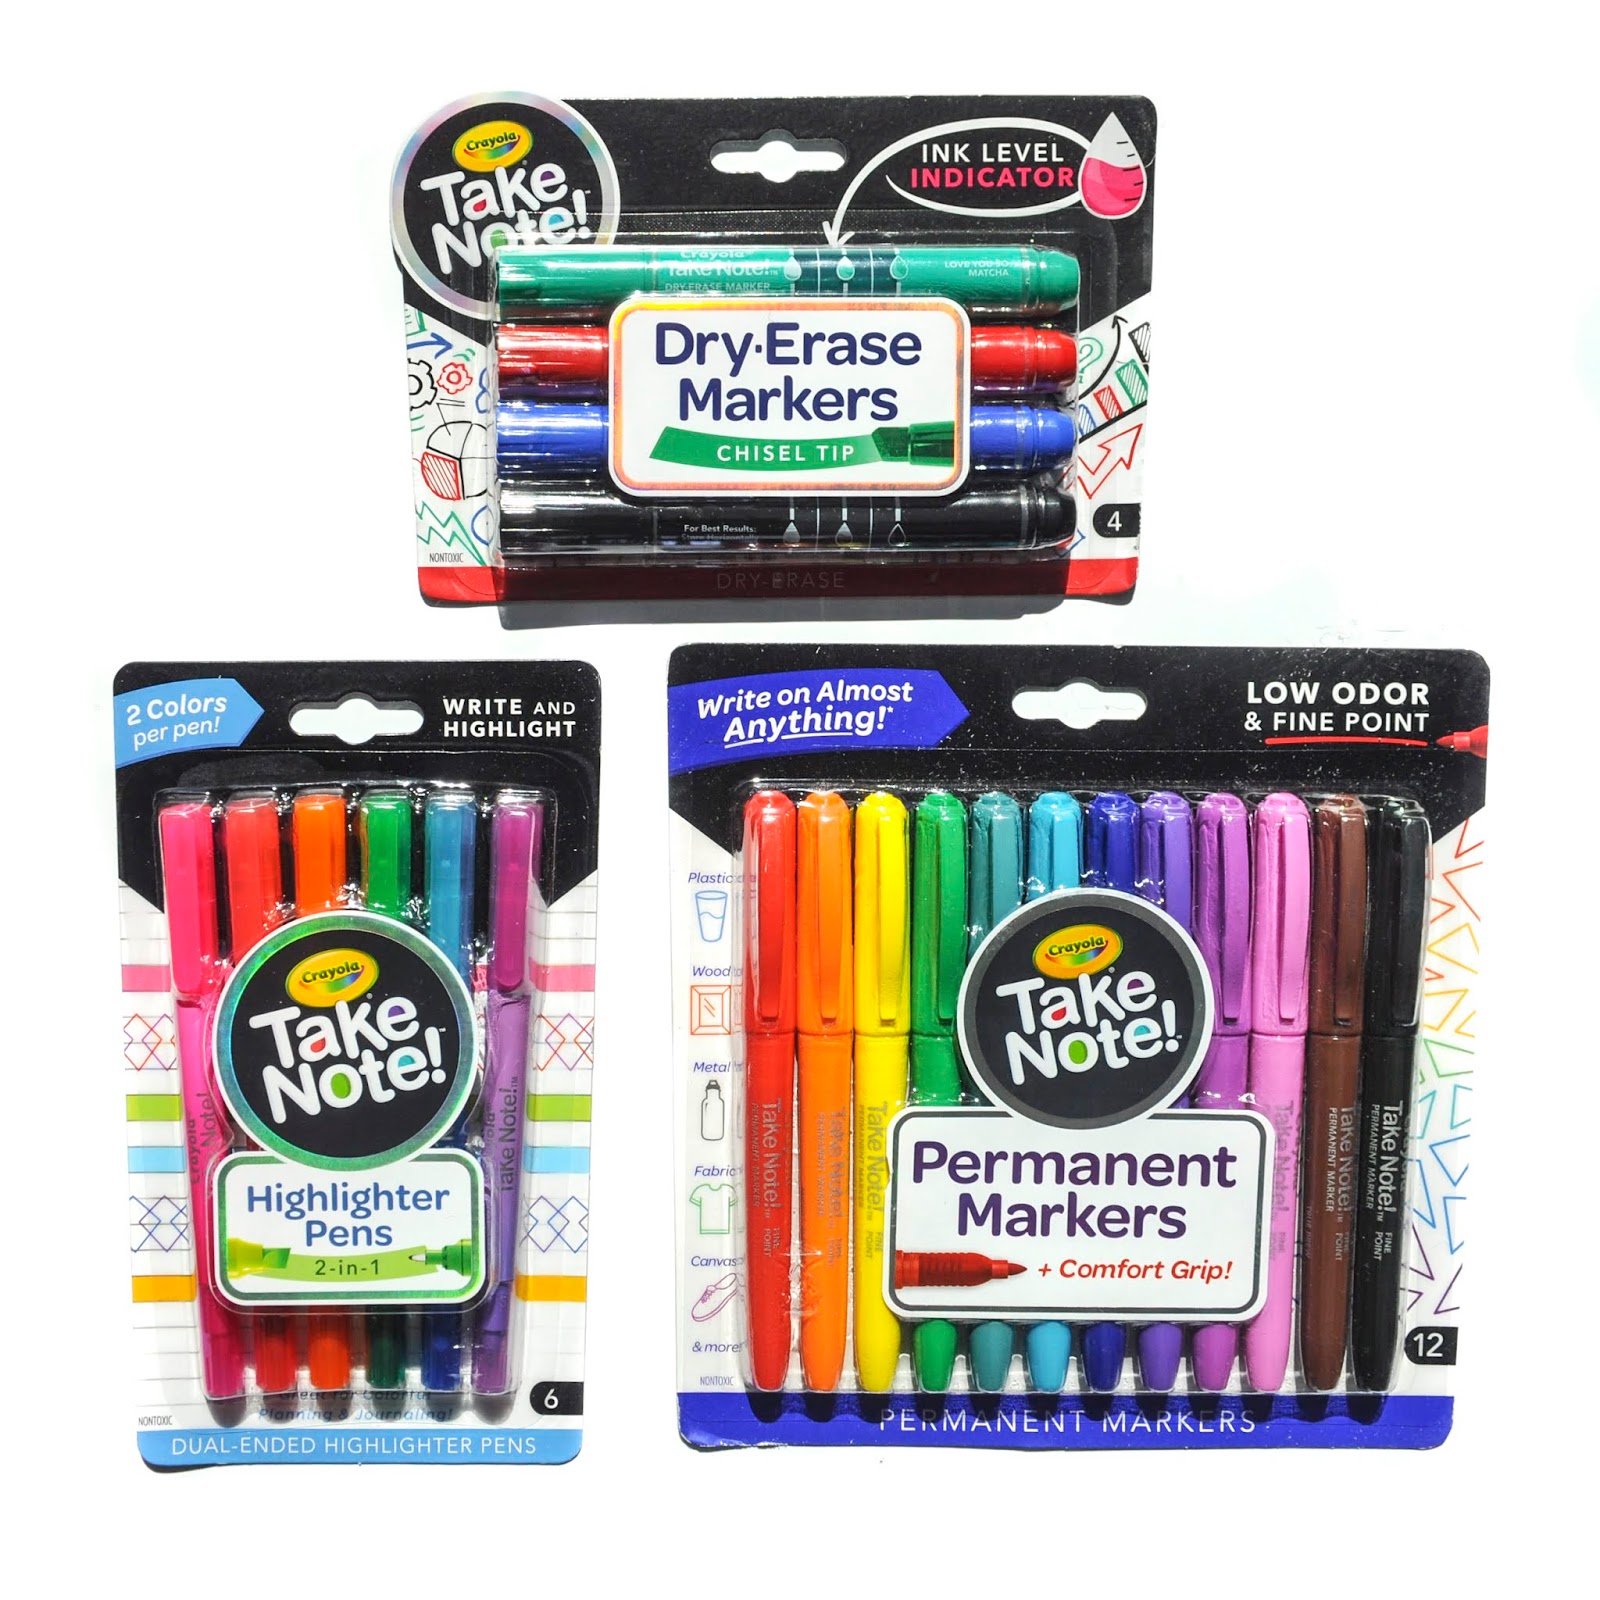  Crayola Take Note Chisel Tip Dry Erase Markers